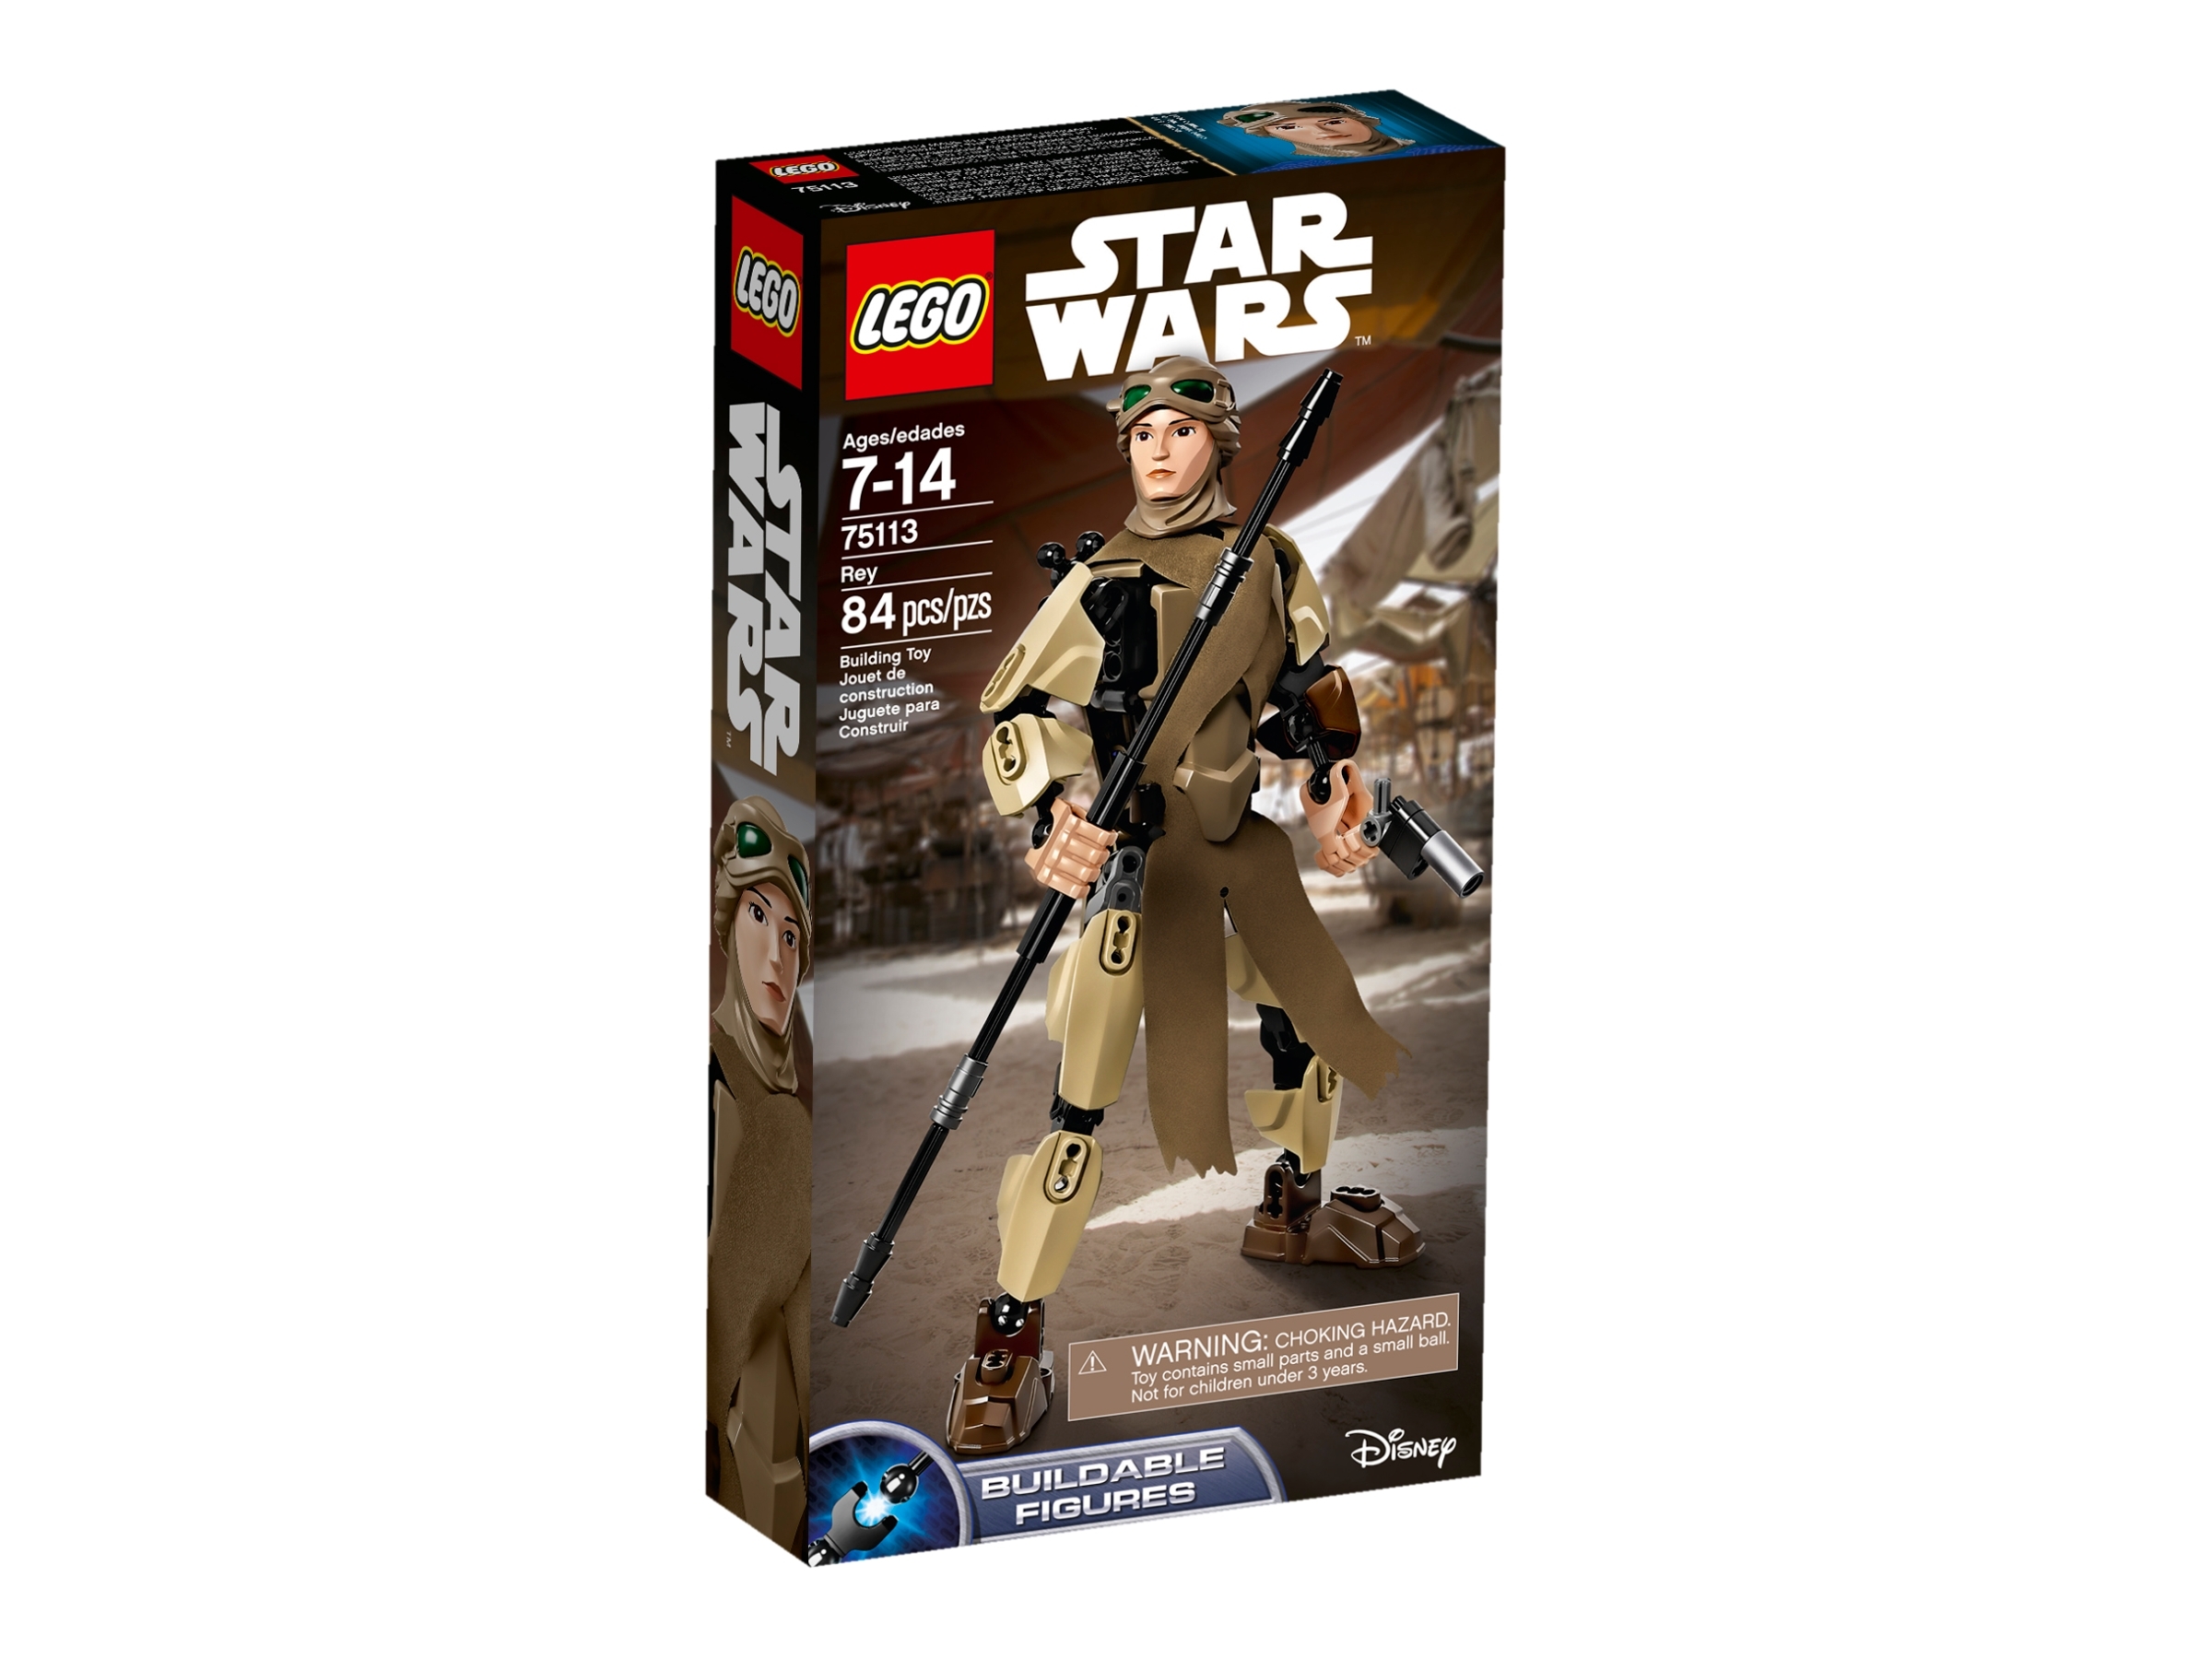 Rey Lego Star Wars Neuware Set 75113 OVP 